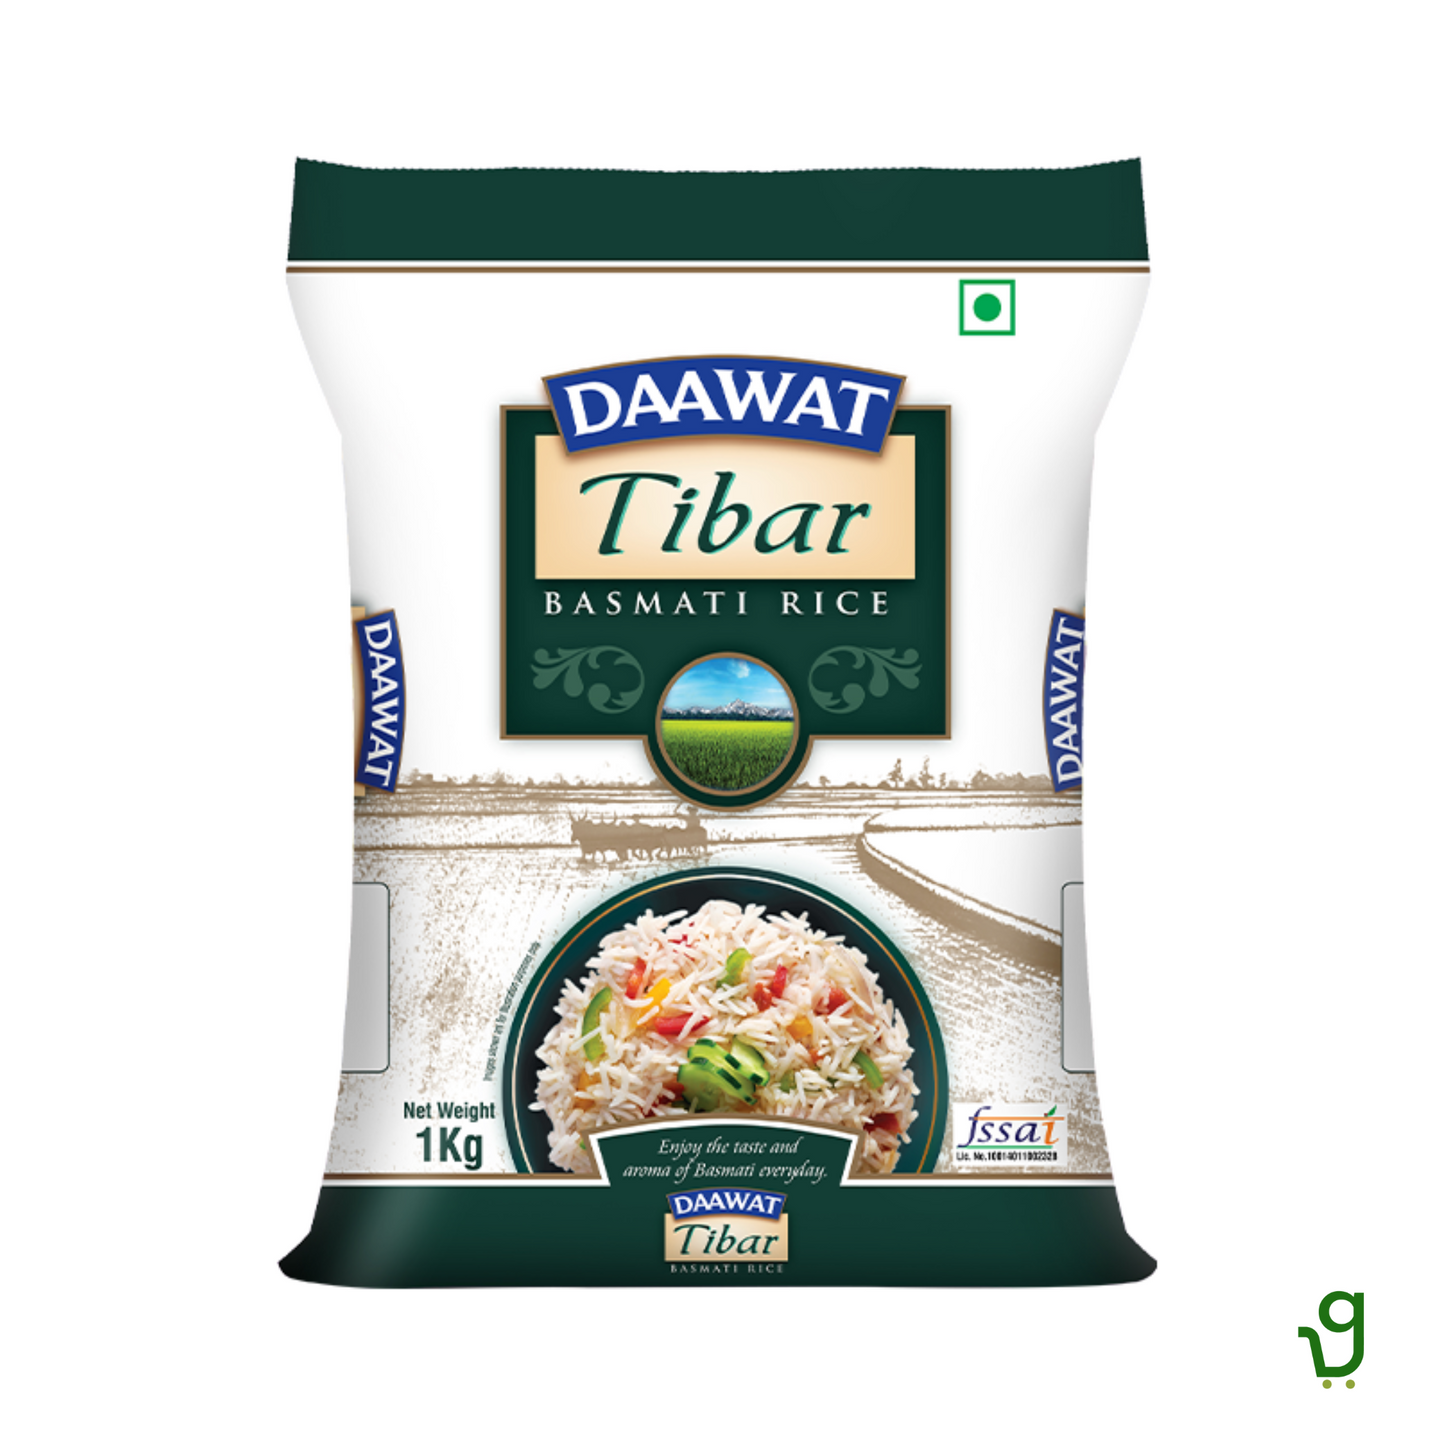 Daawat Tibar Basmati Rice 1 Kg